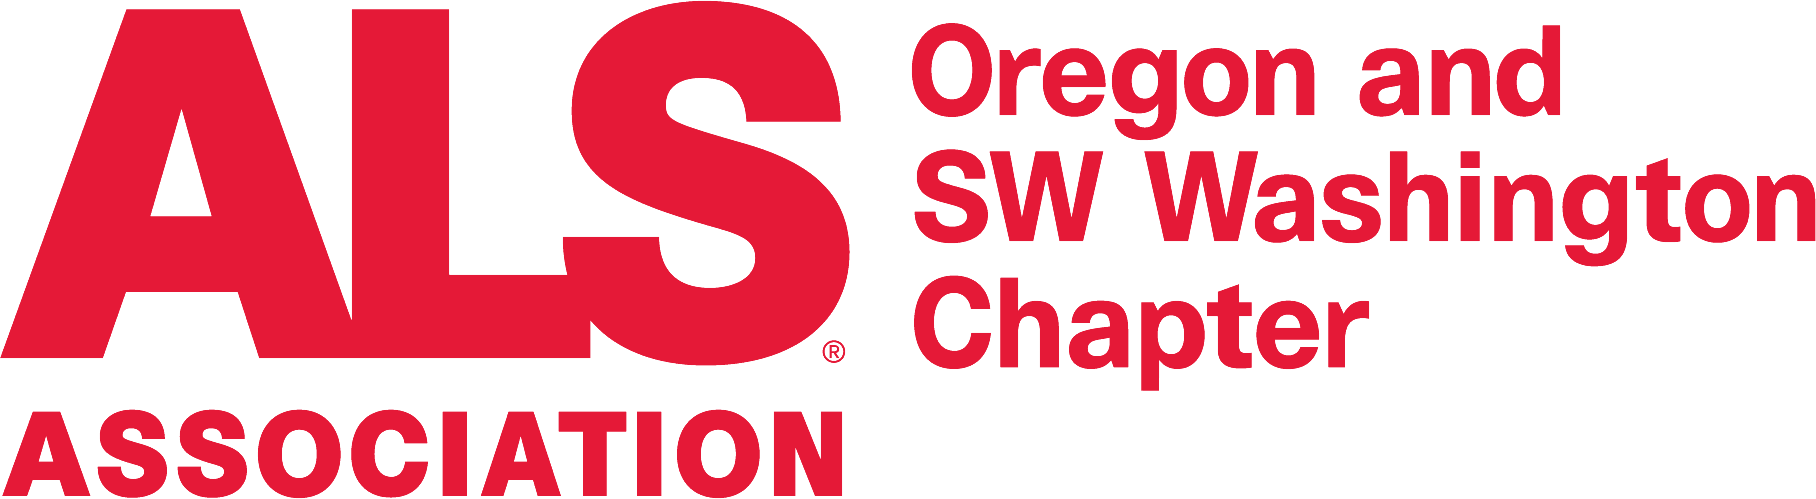 ALS Association Oregon & SW Washington Chapter